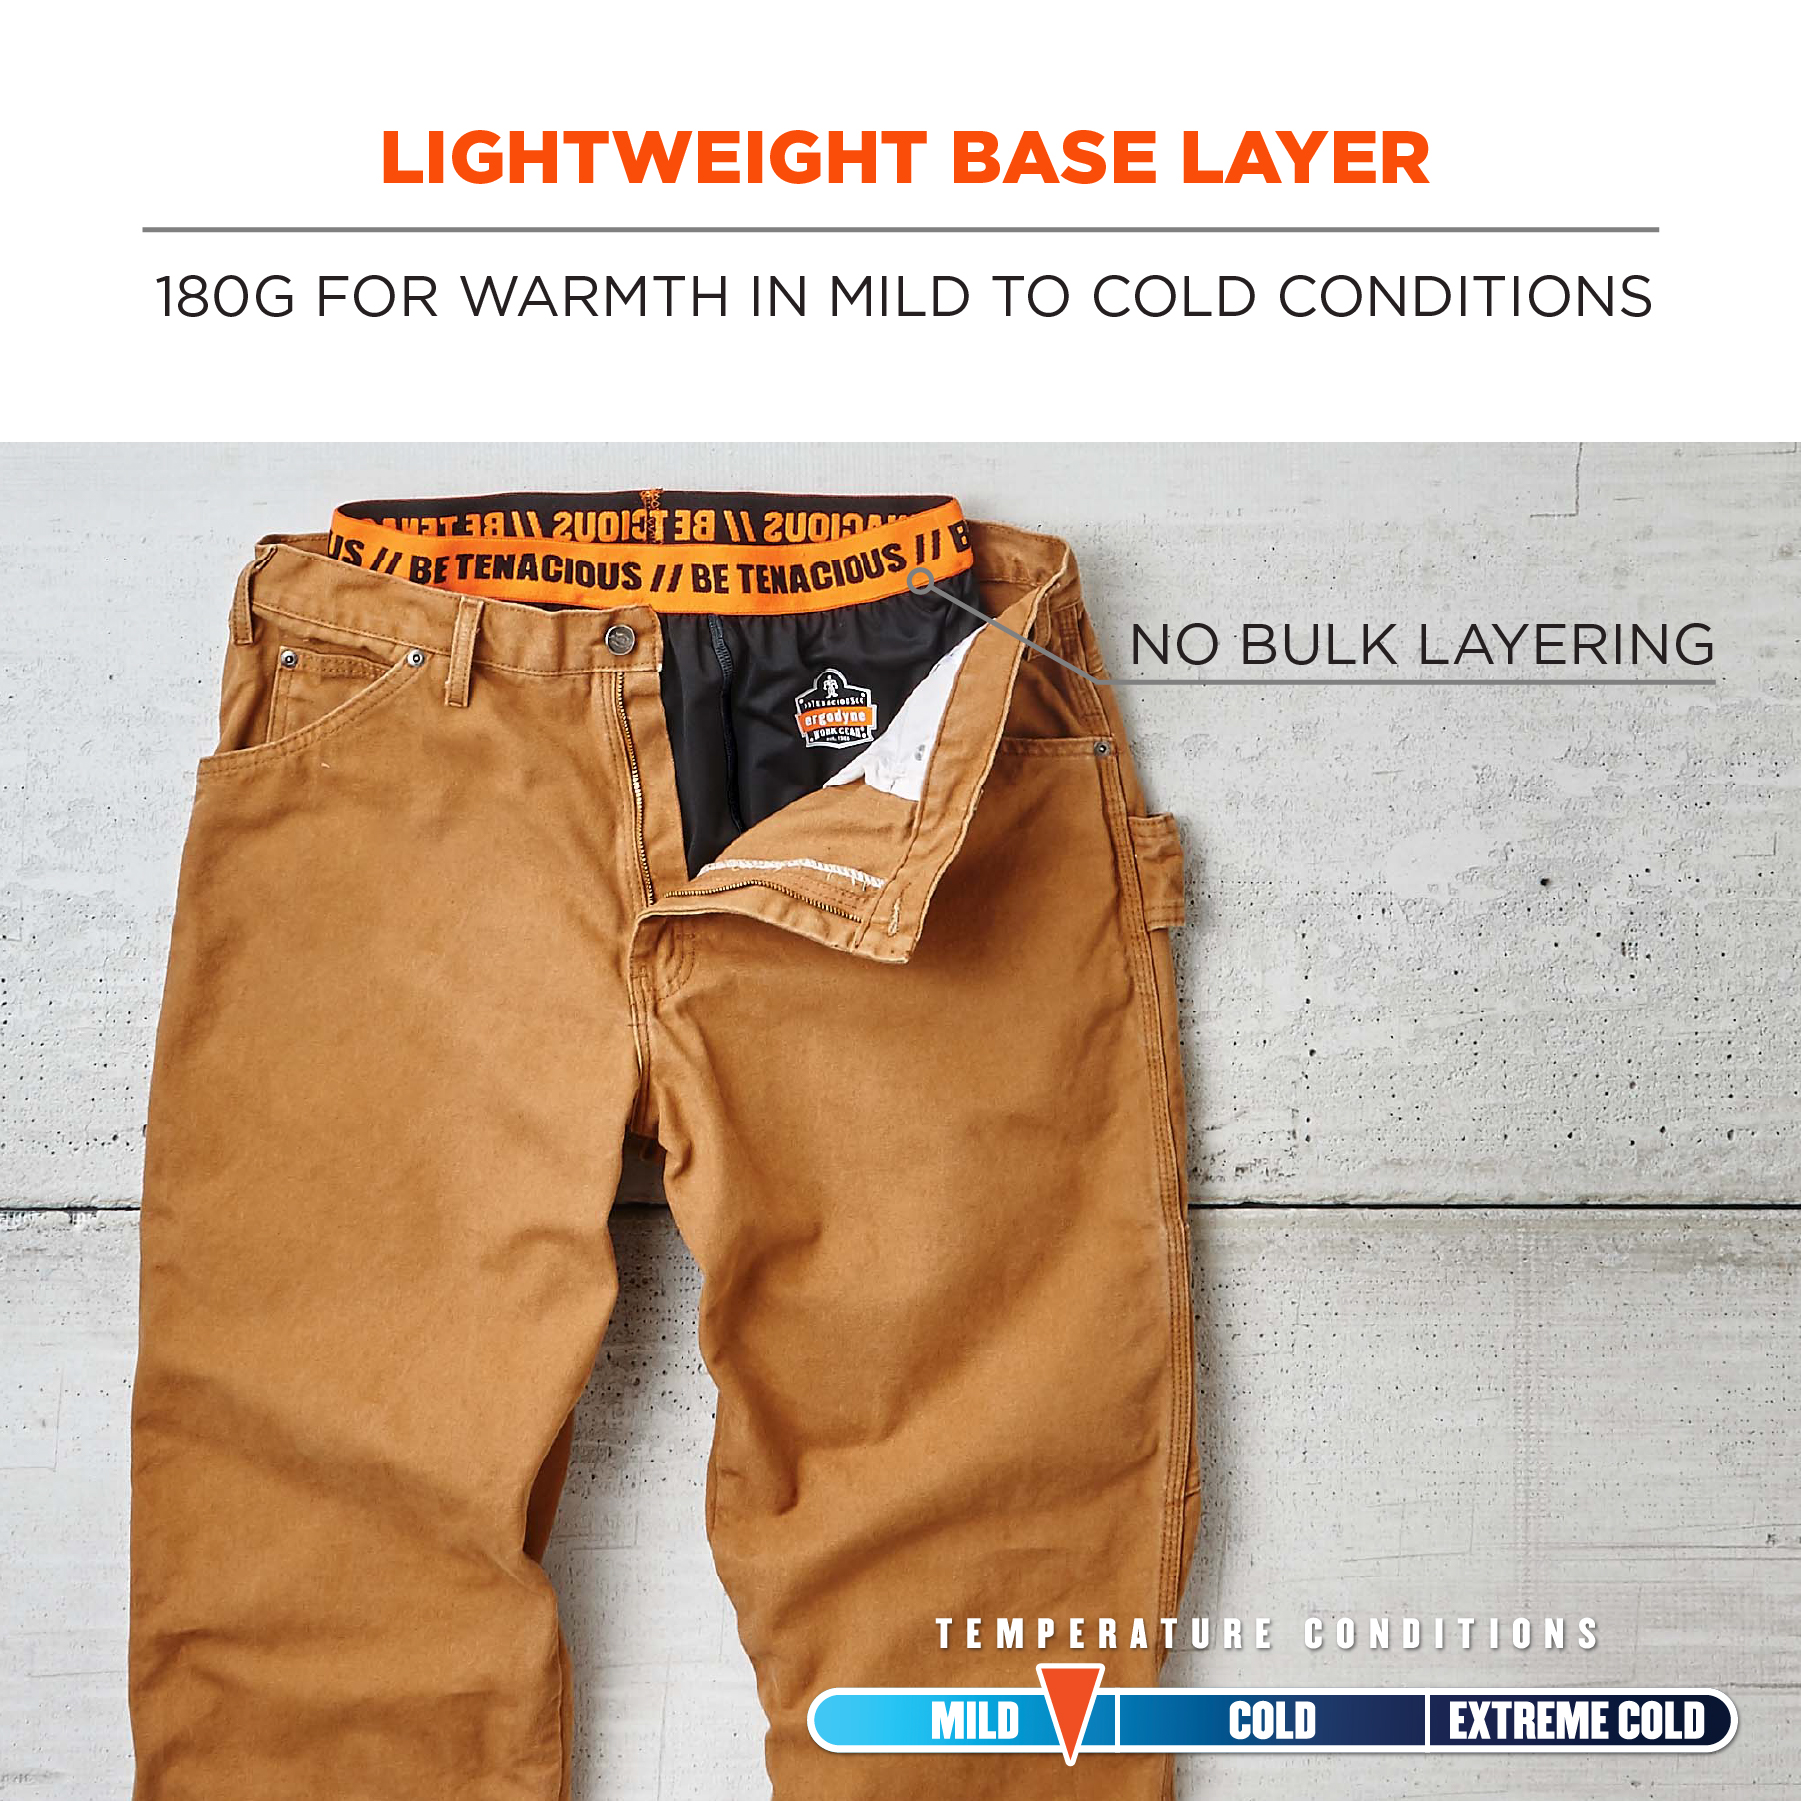 Lightweight Base Layer Pants